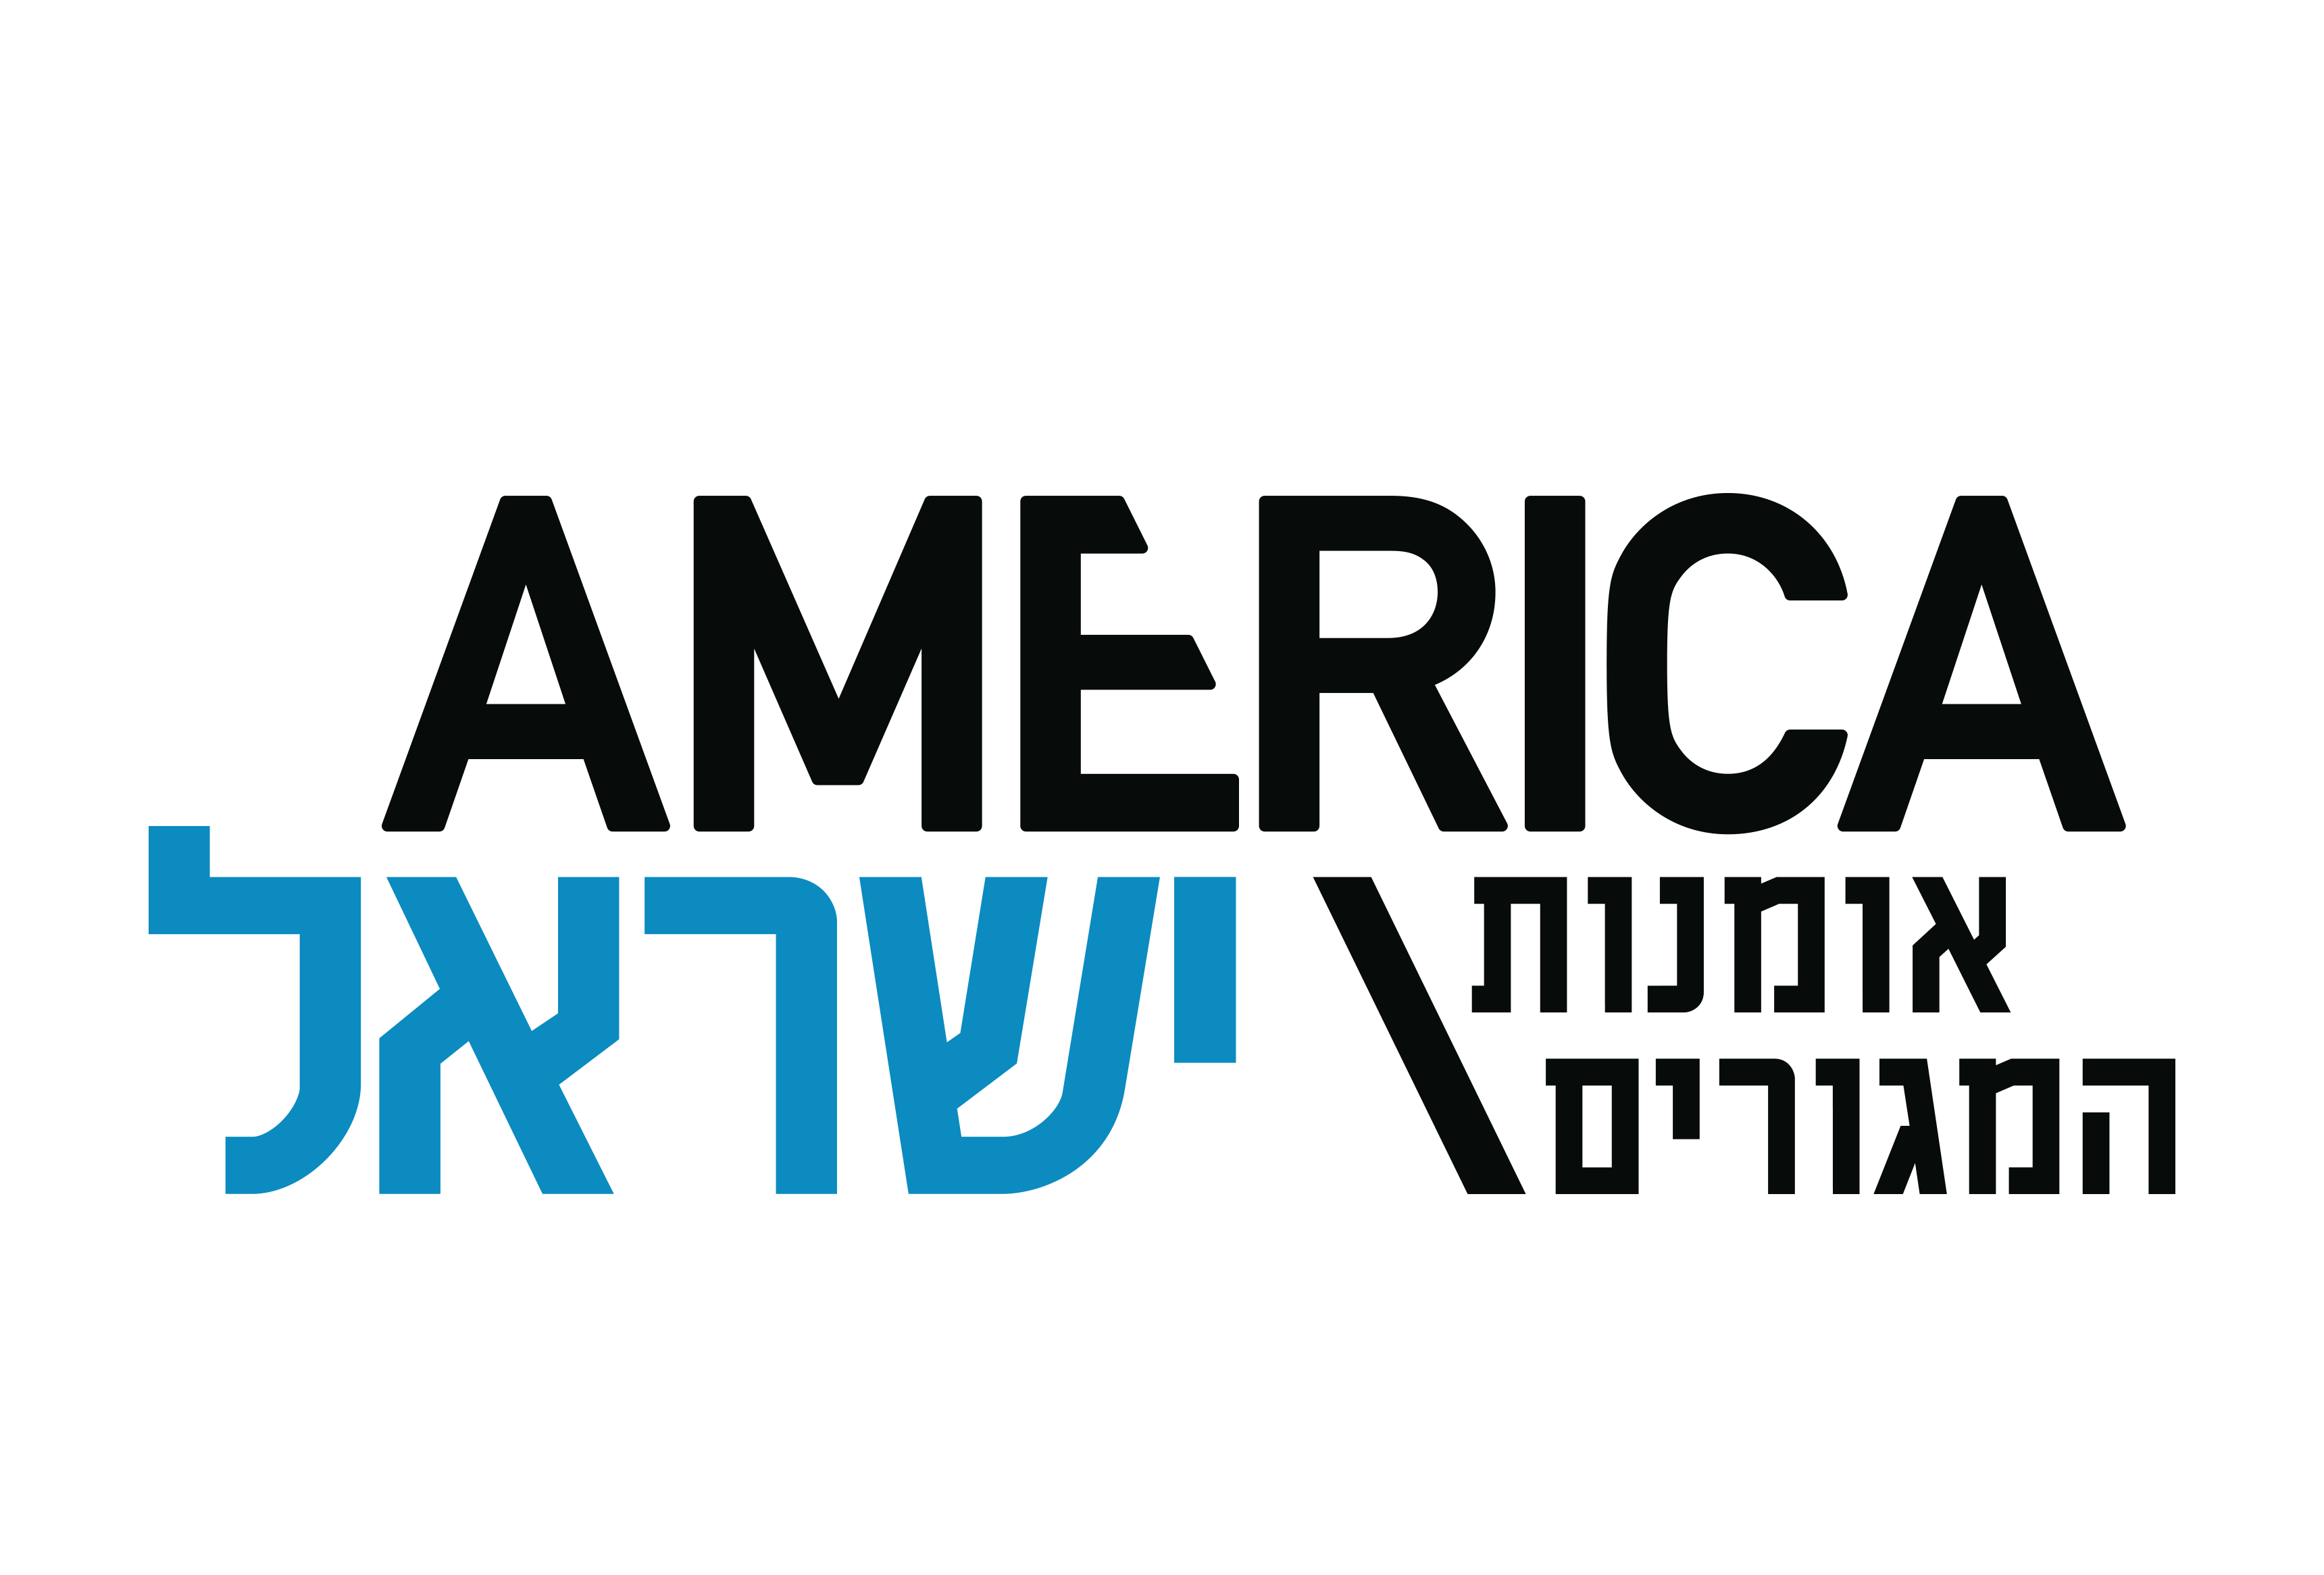 America ישראל